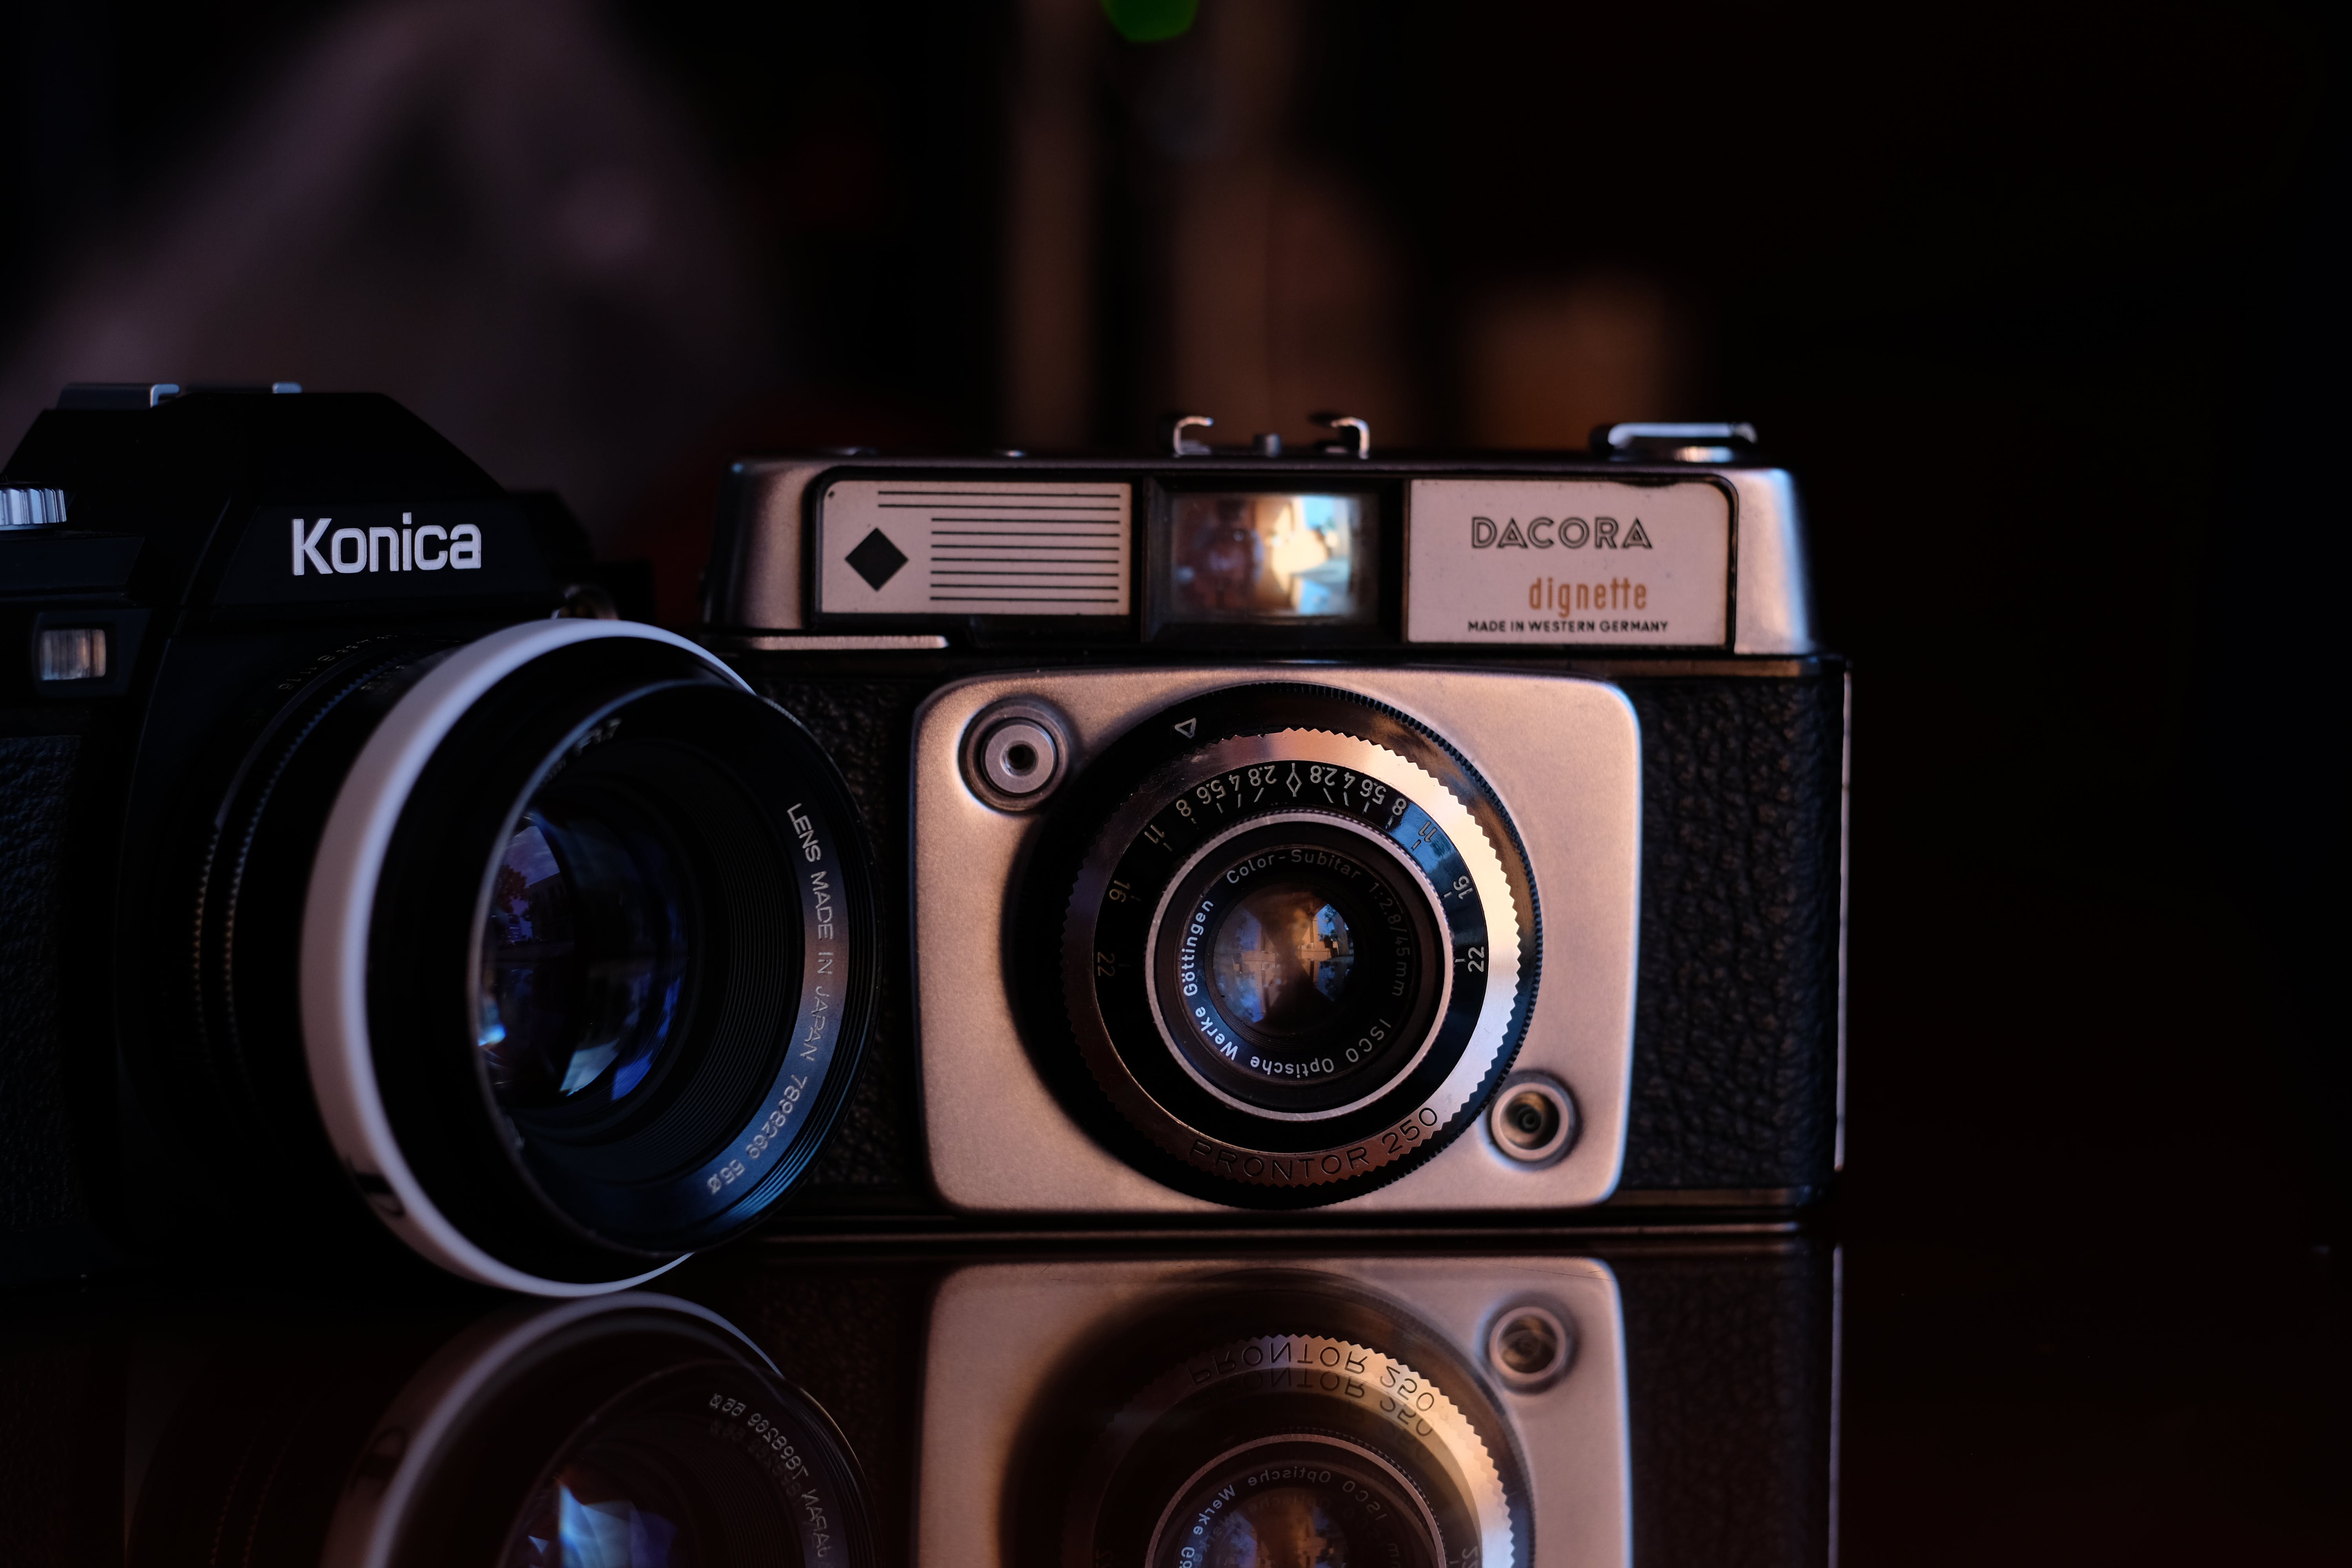 top 10 film cameras